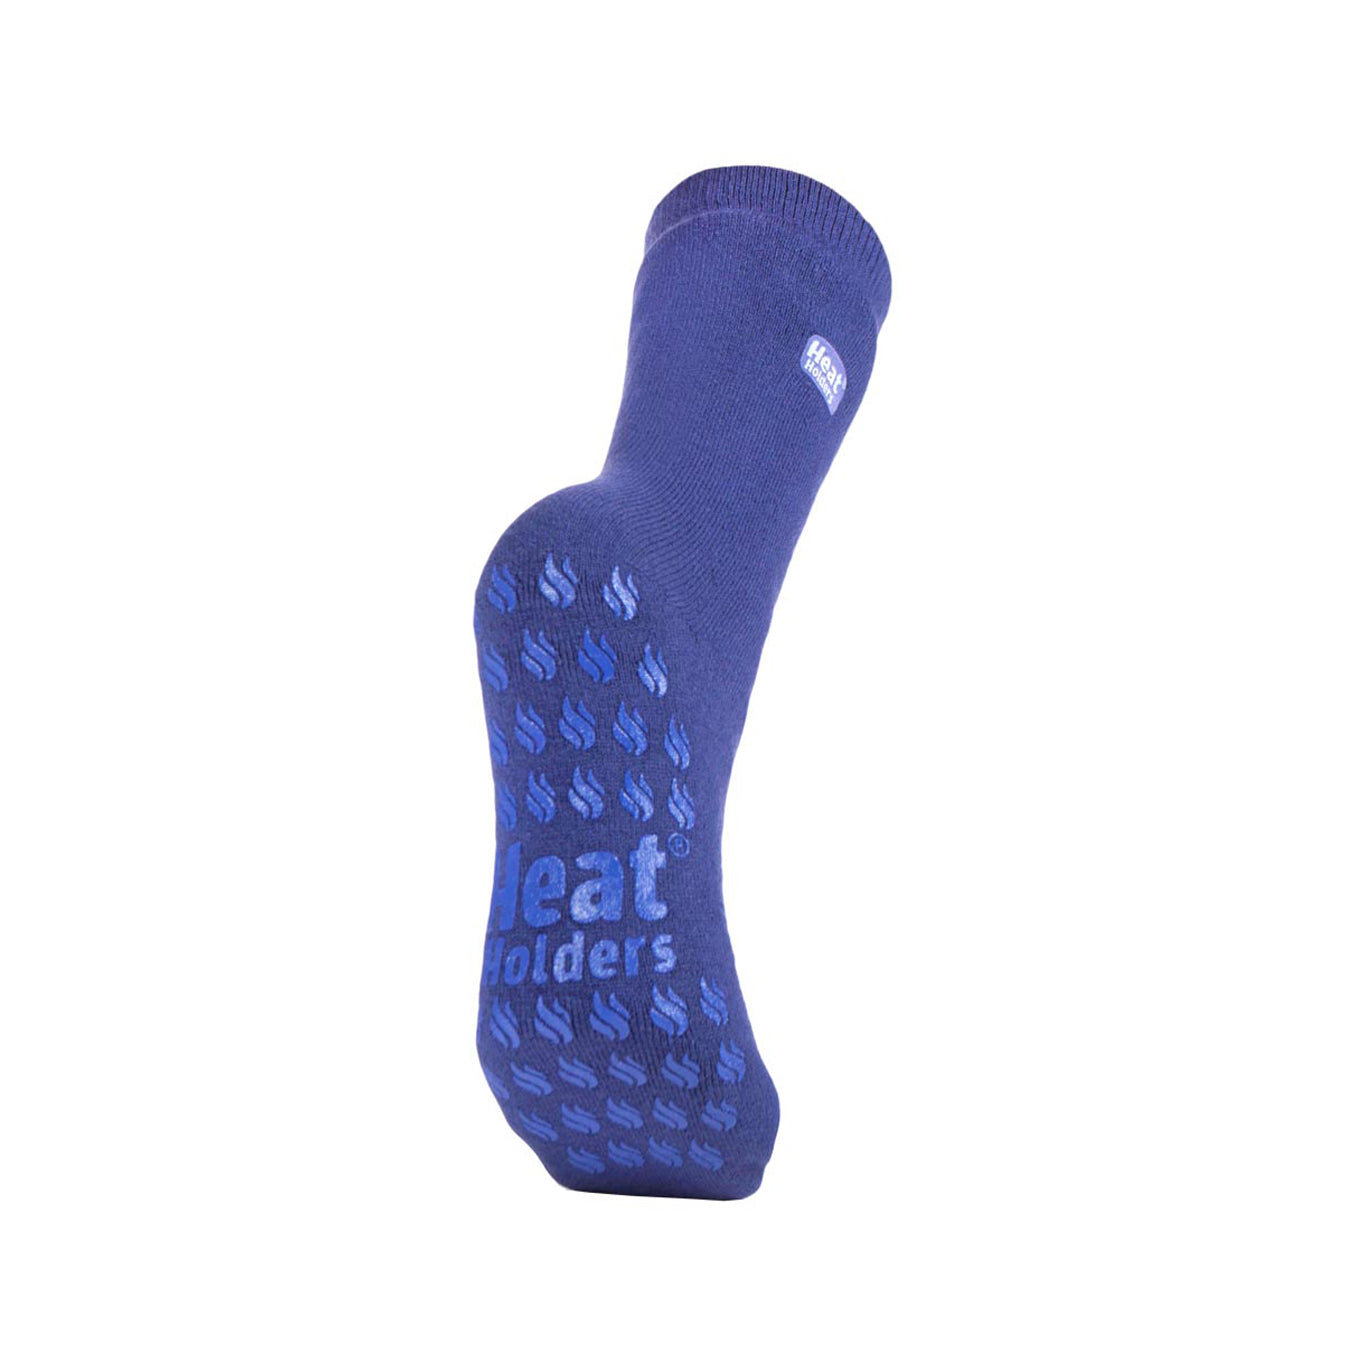 1 Pair Ladies IOMI FootNurse Dual Layer Raynaud's Thermal Slipper Socks - Lavender